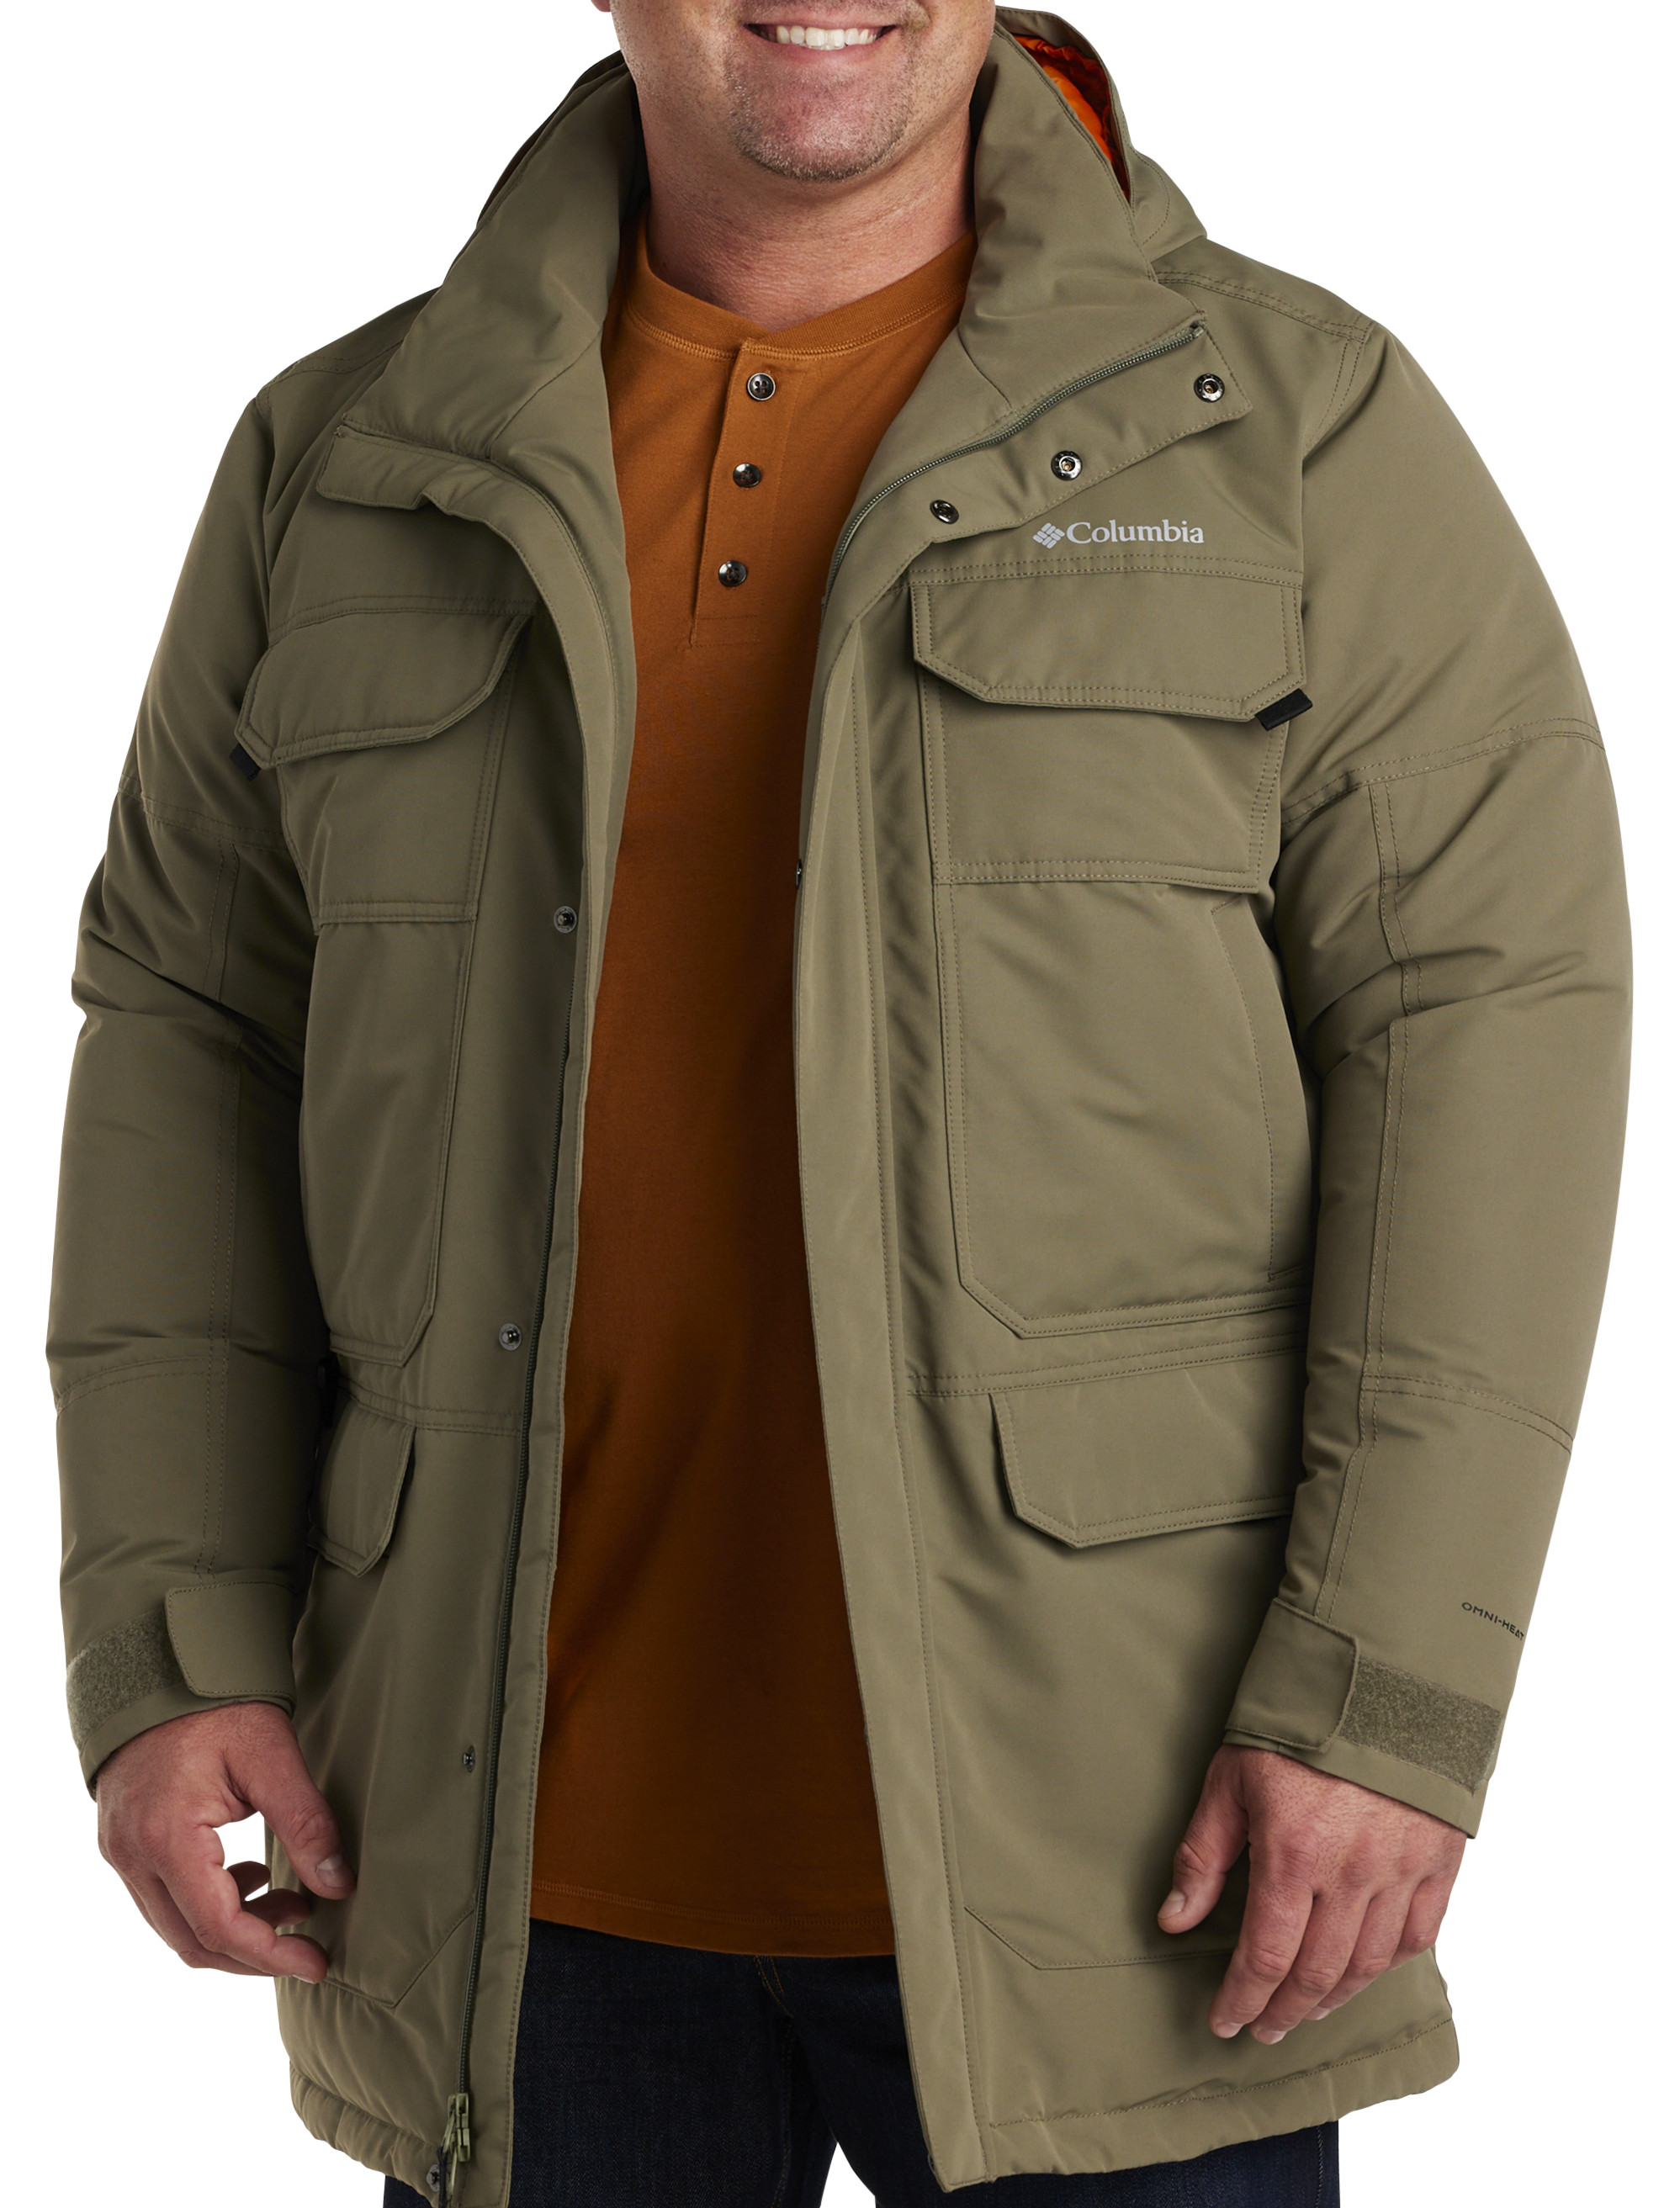 Medium-Weight Tall Puffer Jacket for Men in Navy XL / Tall / Navy